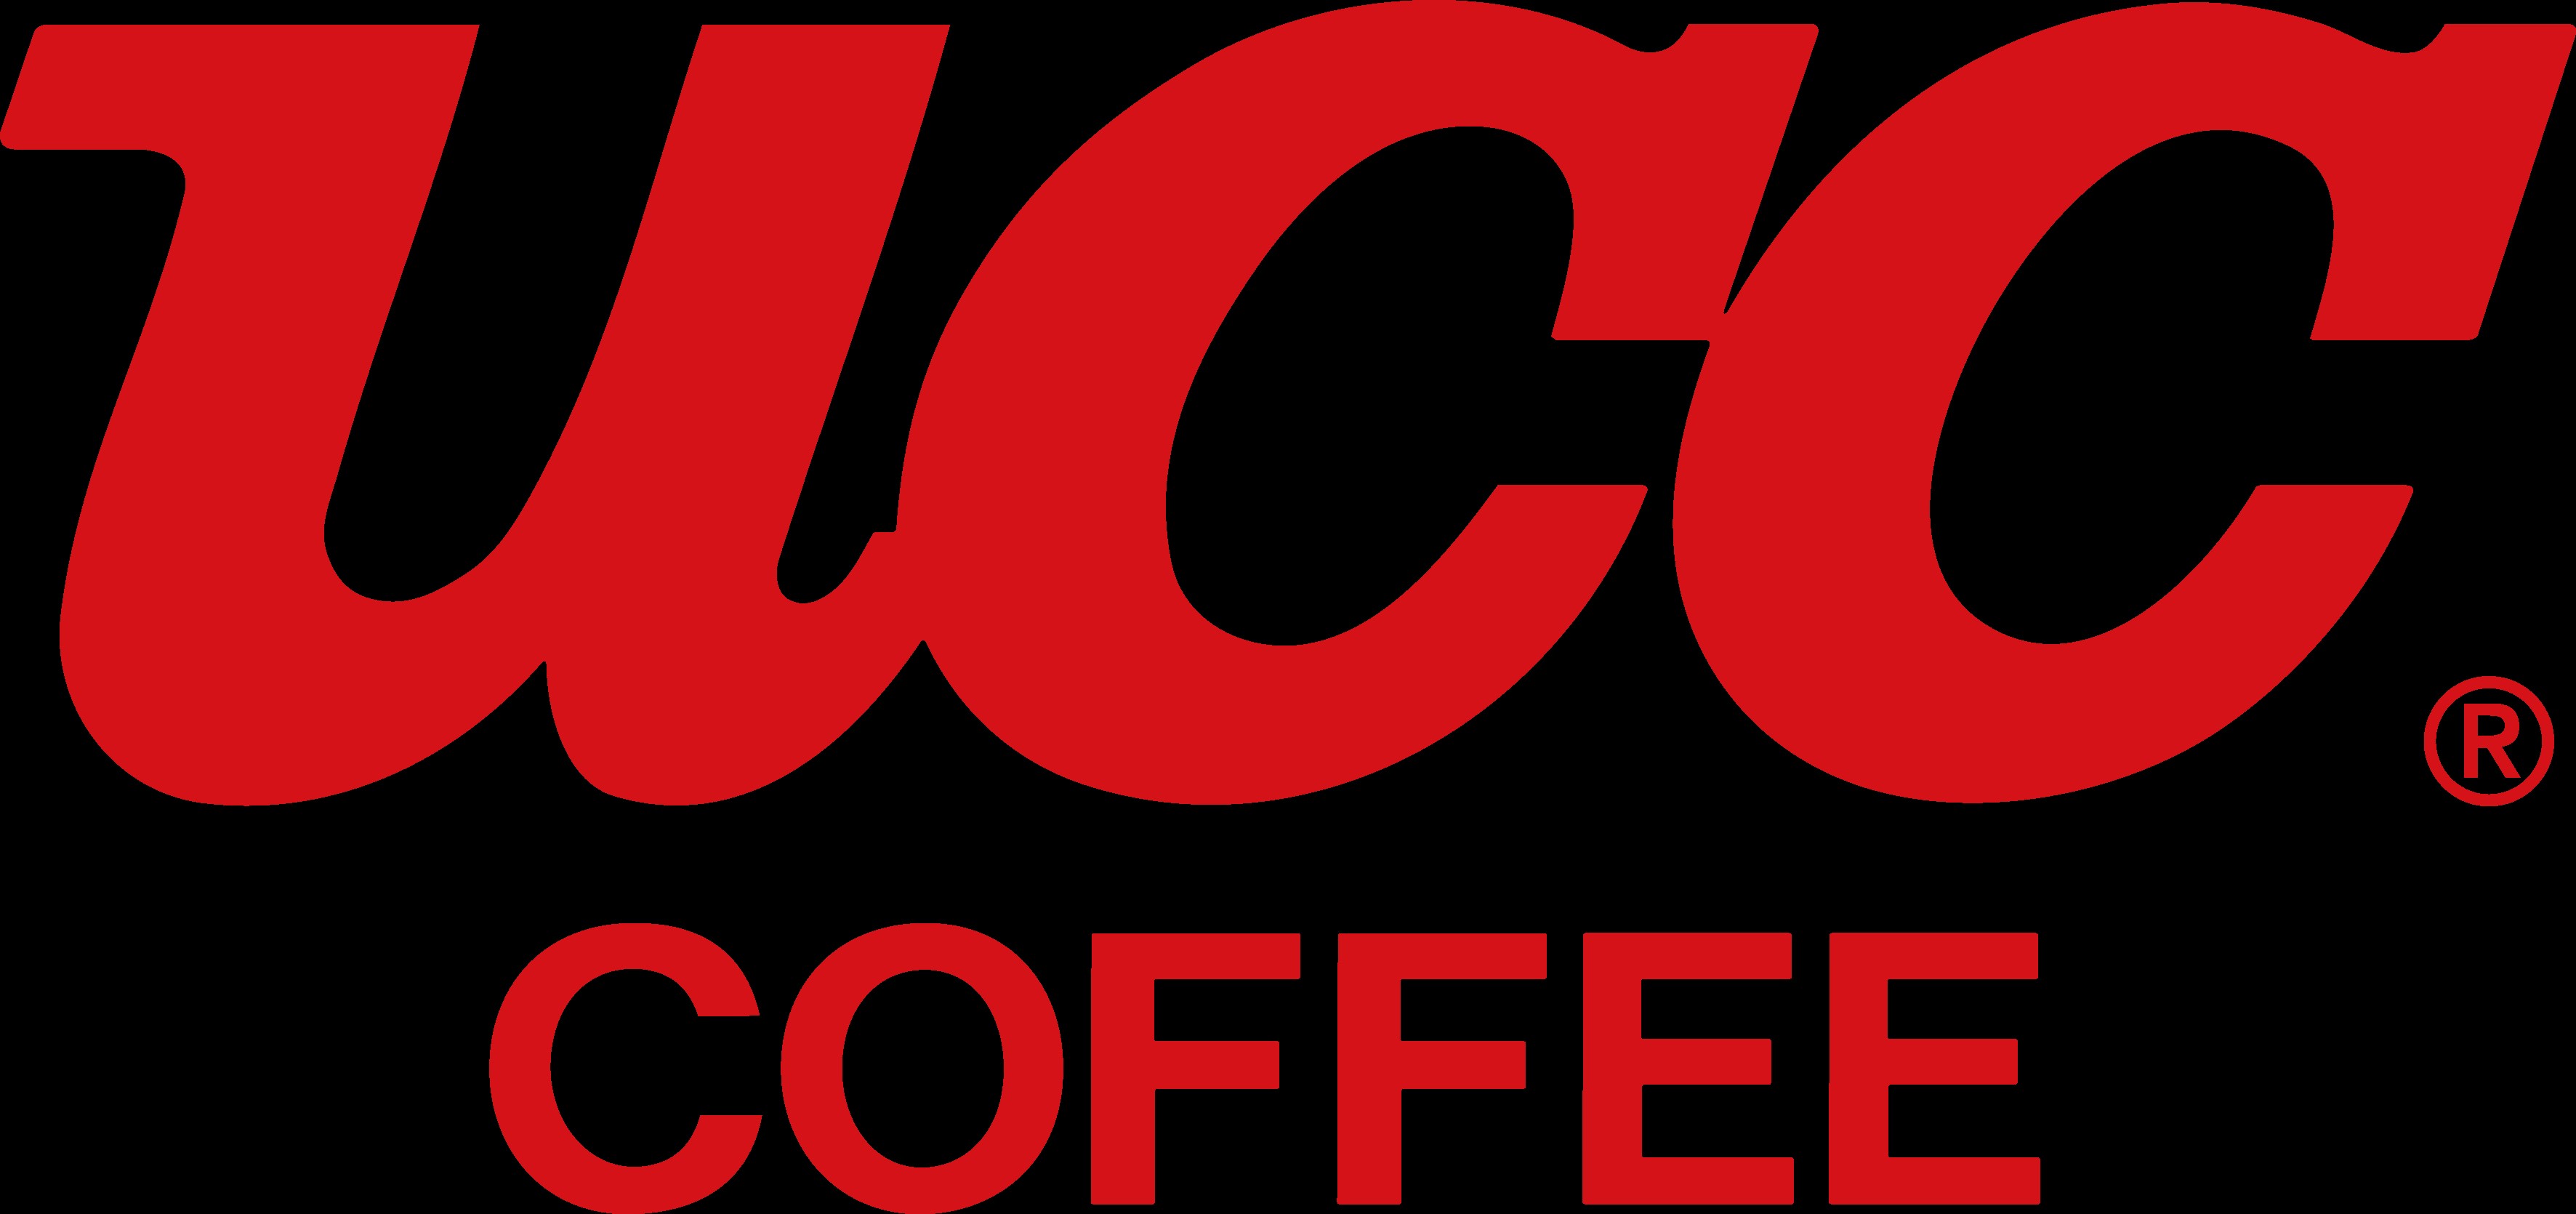 UCC Coffee Ltd image.